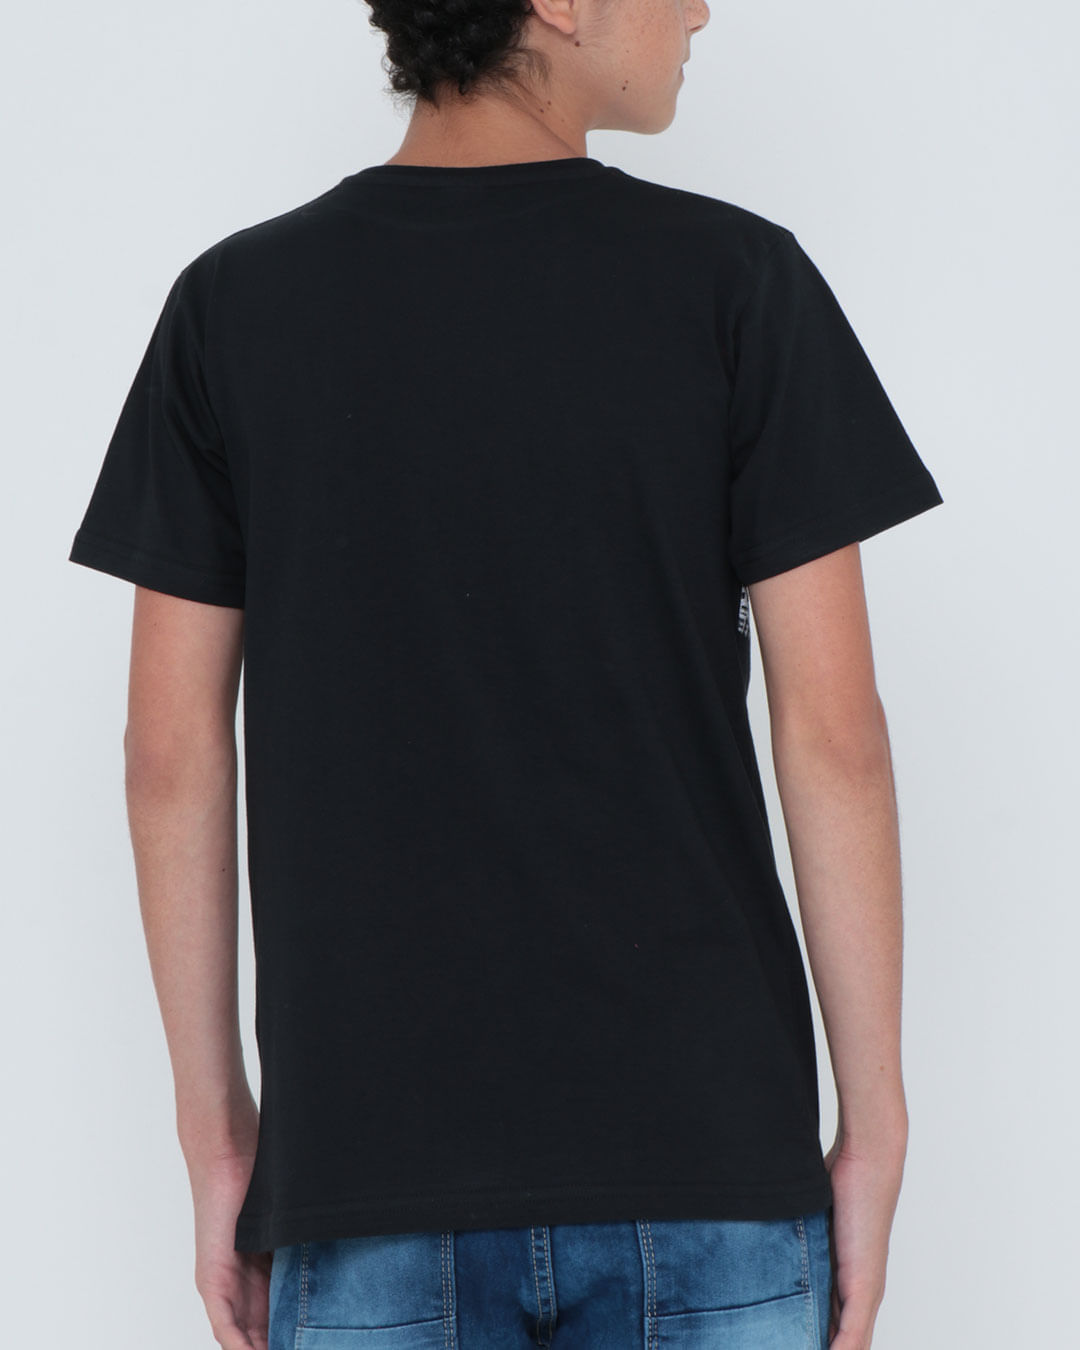 Camiseta-Tro855-Mc-M1016-Street---Preto